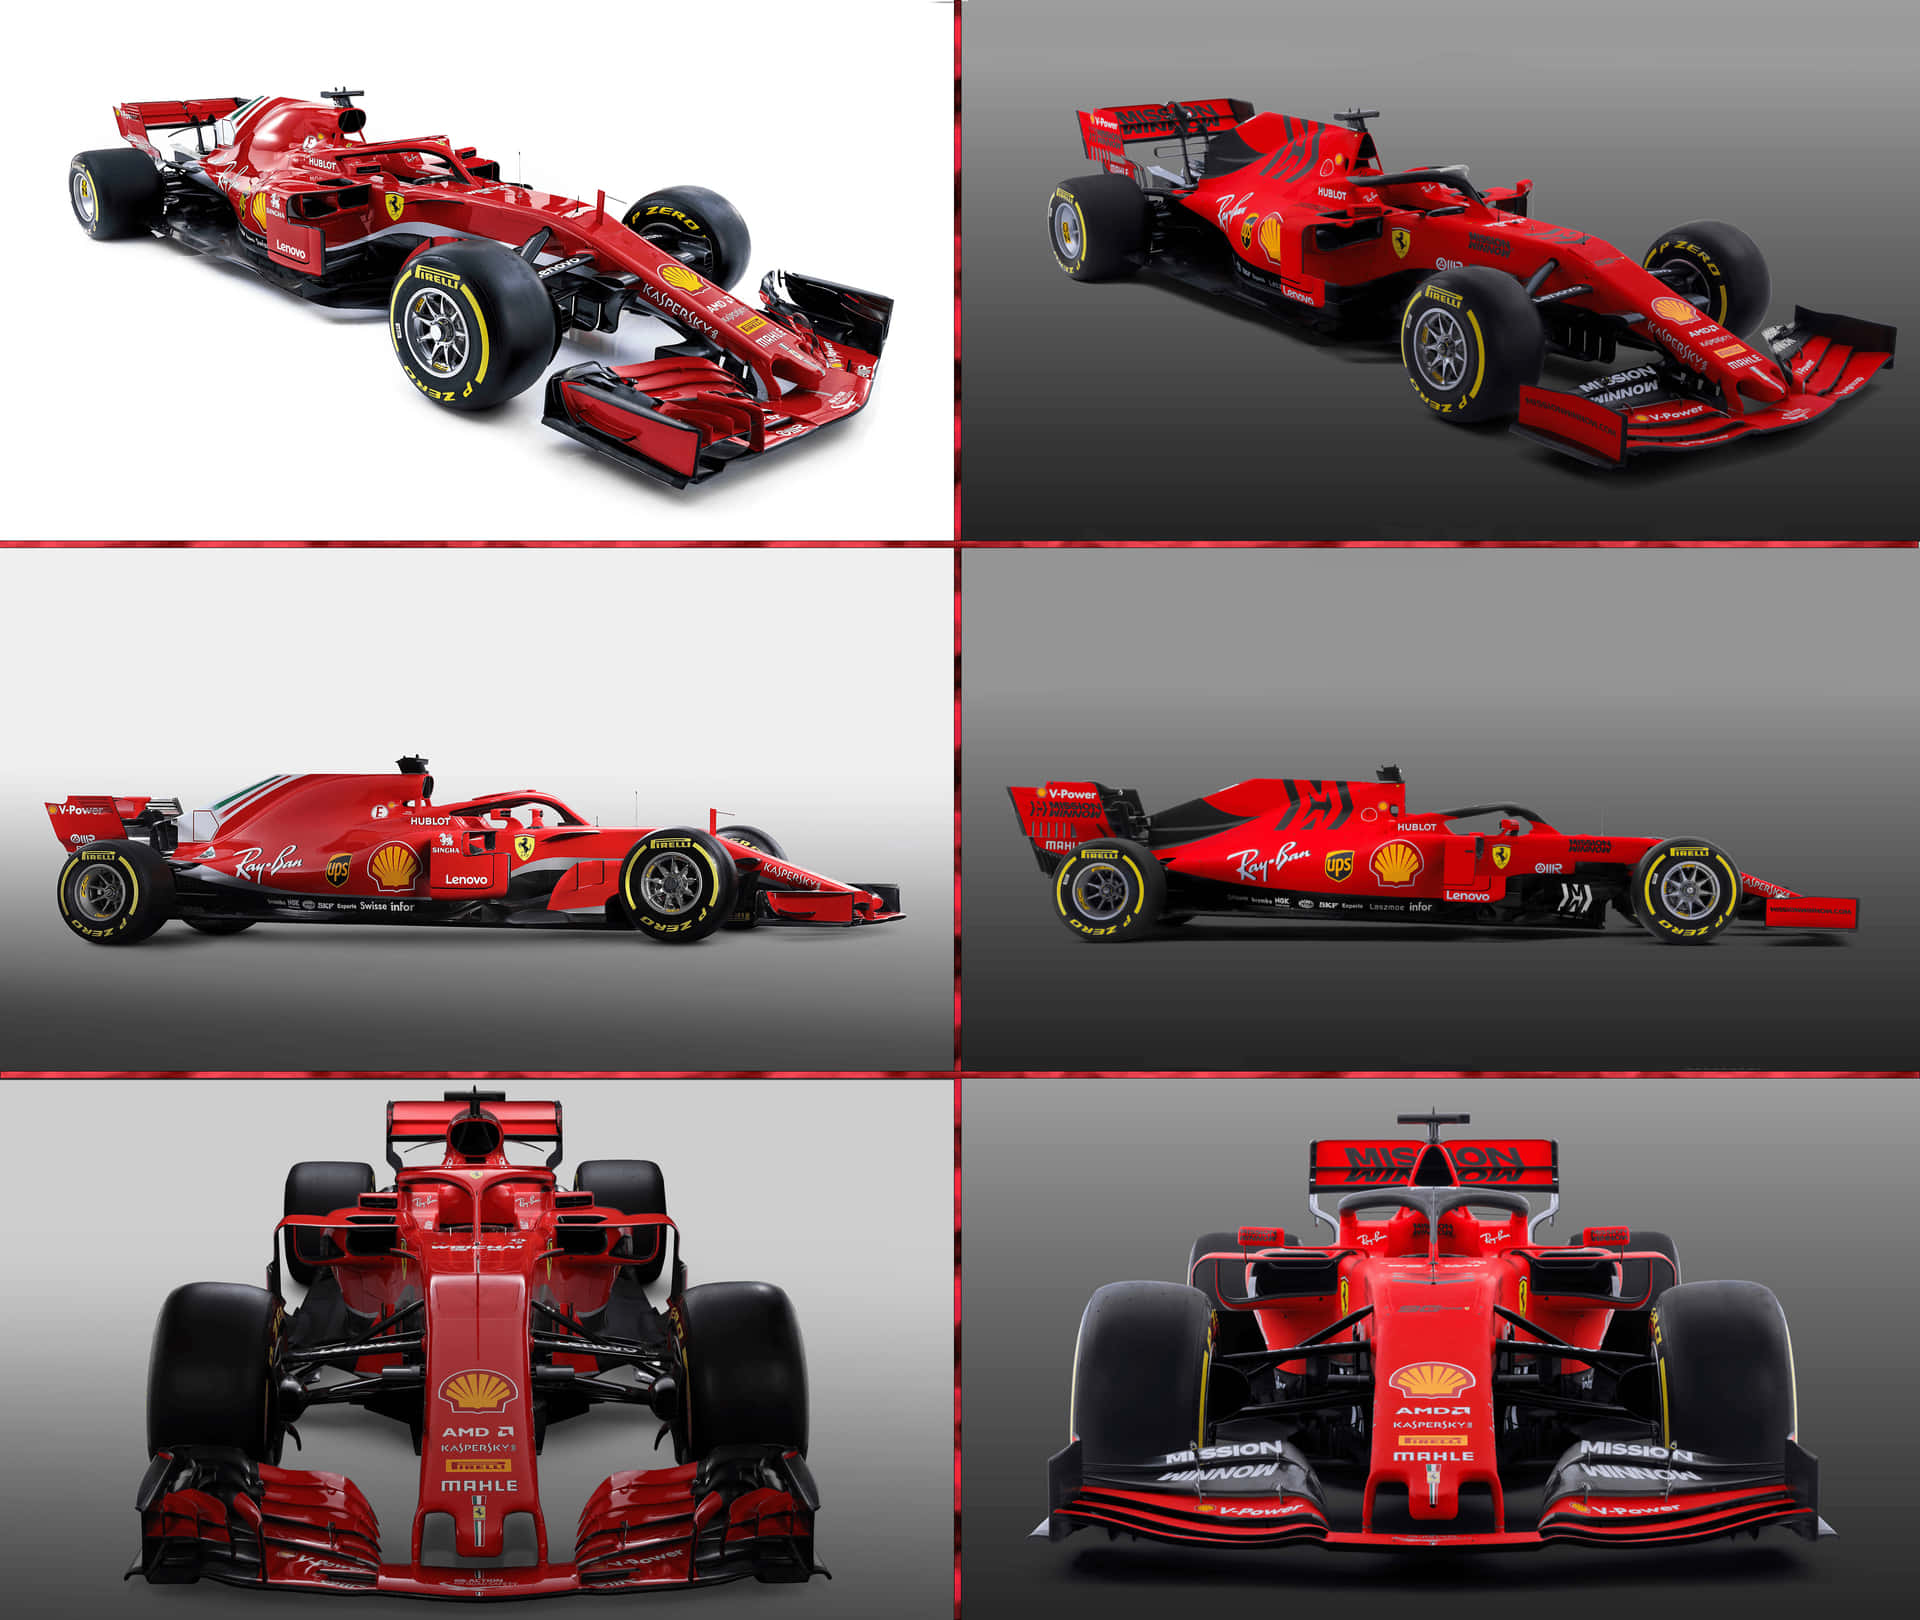 Ferrari F1 Car - F1 Car - Ferrari F1 Car - Ferrari F1 Car - Ferrari Wallpaper